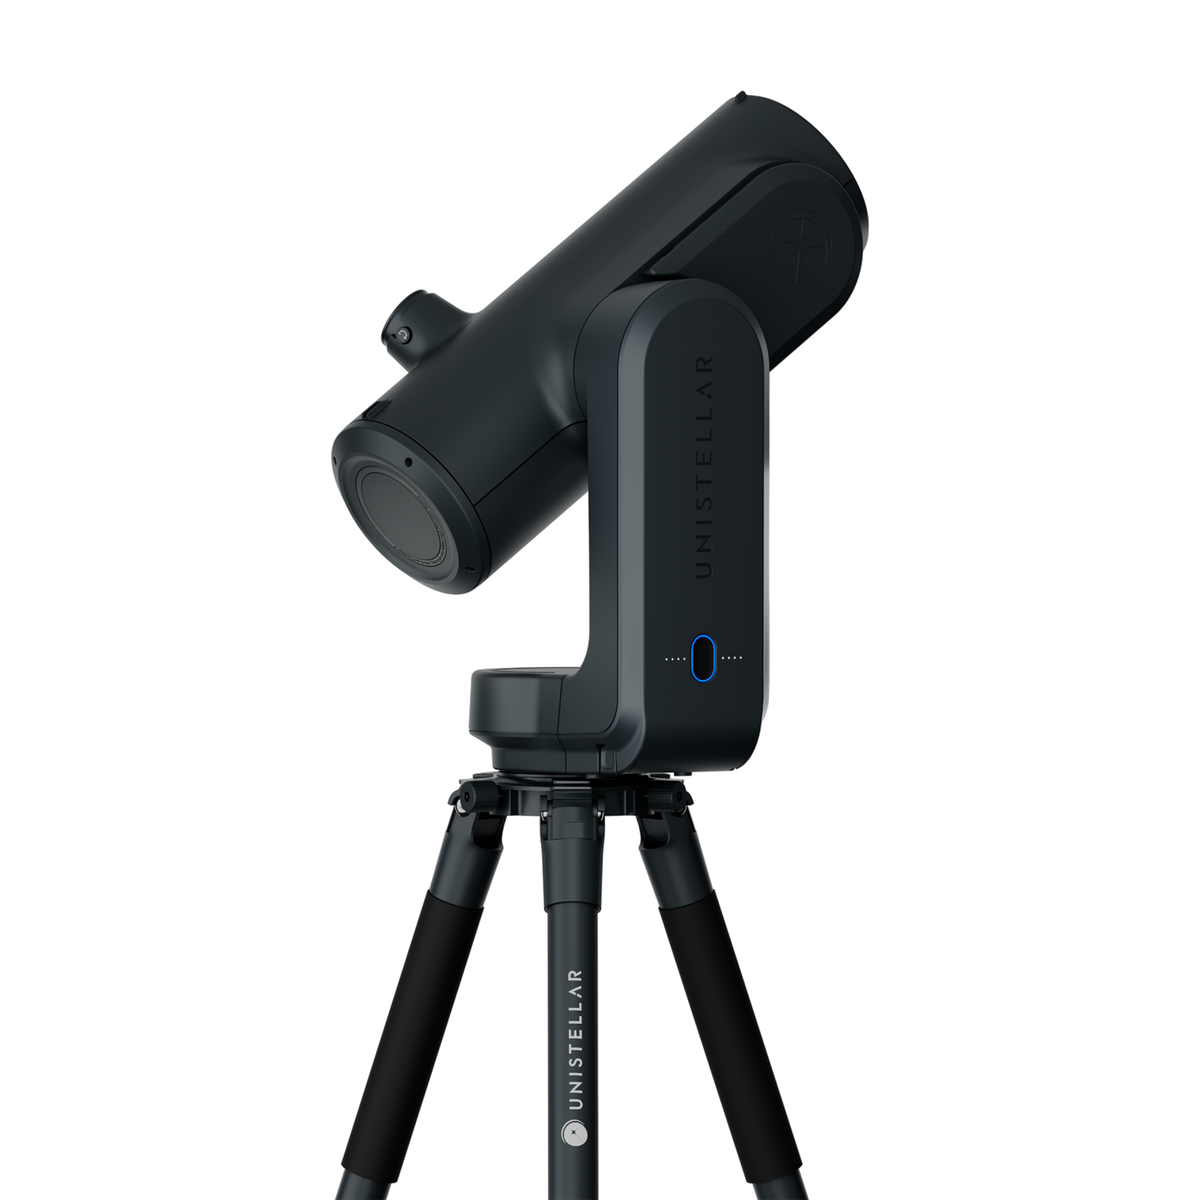 Rollei telescope smart OLED with ✨ – Odyssey display - Pro Unistellar